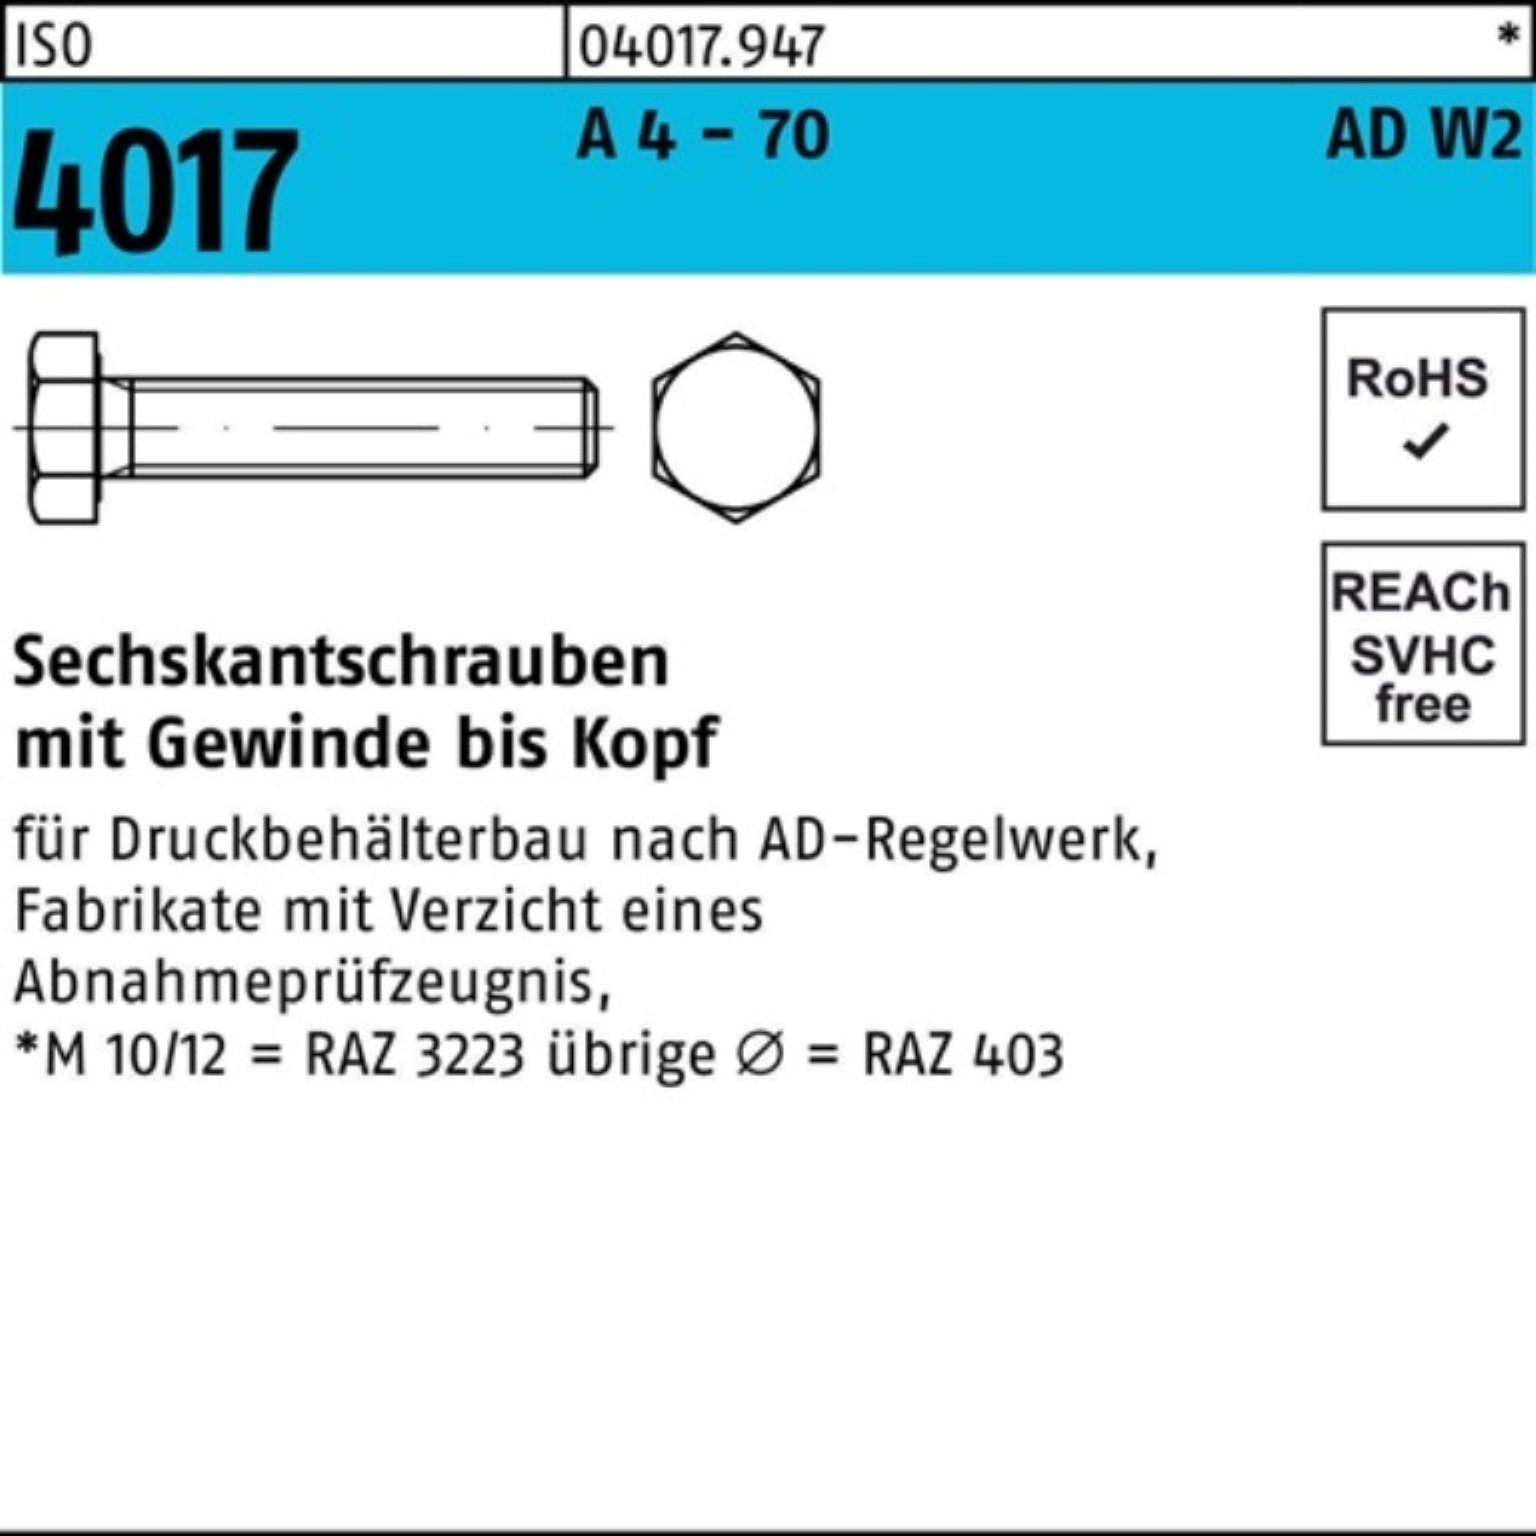 Bufab Sechskantschraube 100er Pack Sechskantschraube ISO 4017 VG M20x 50 A 4 - 70 AD-W2 25 St